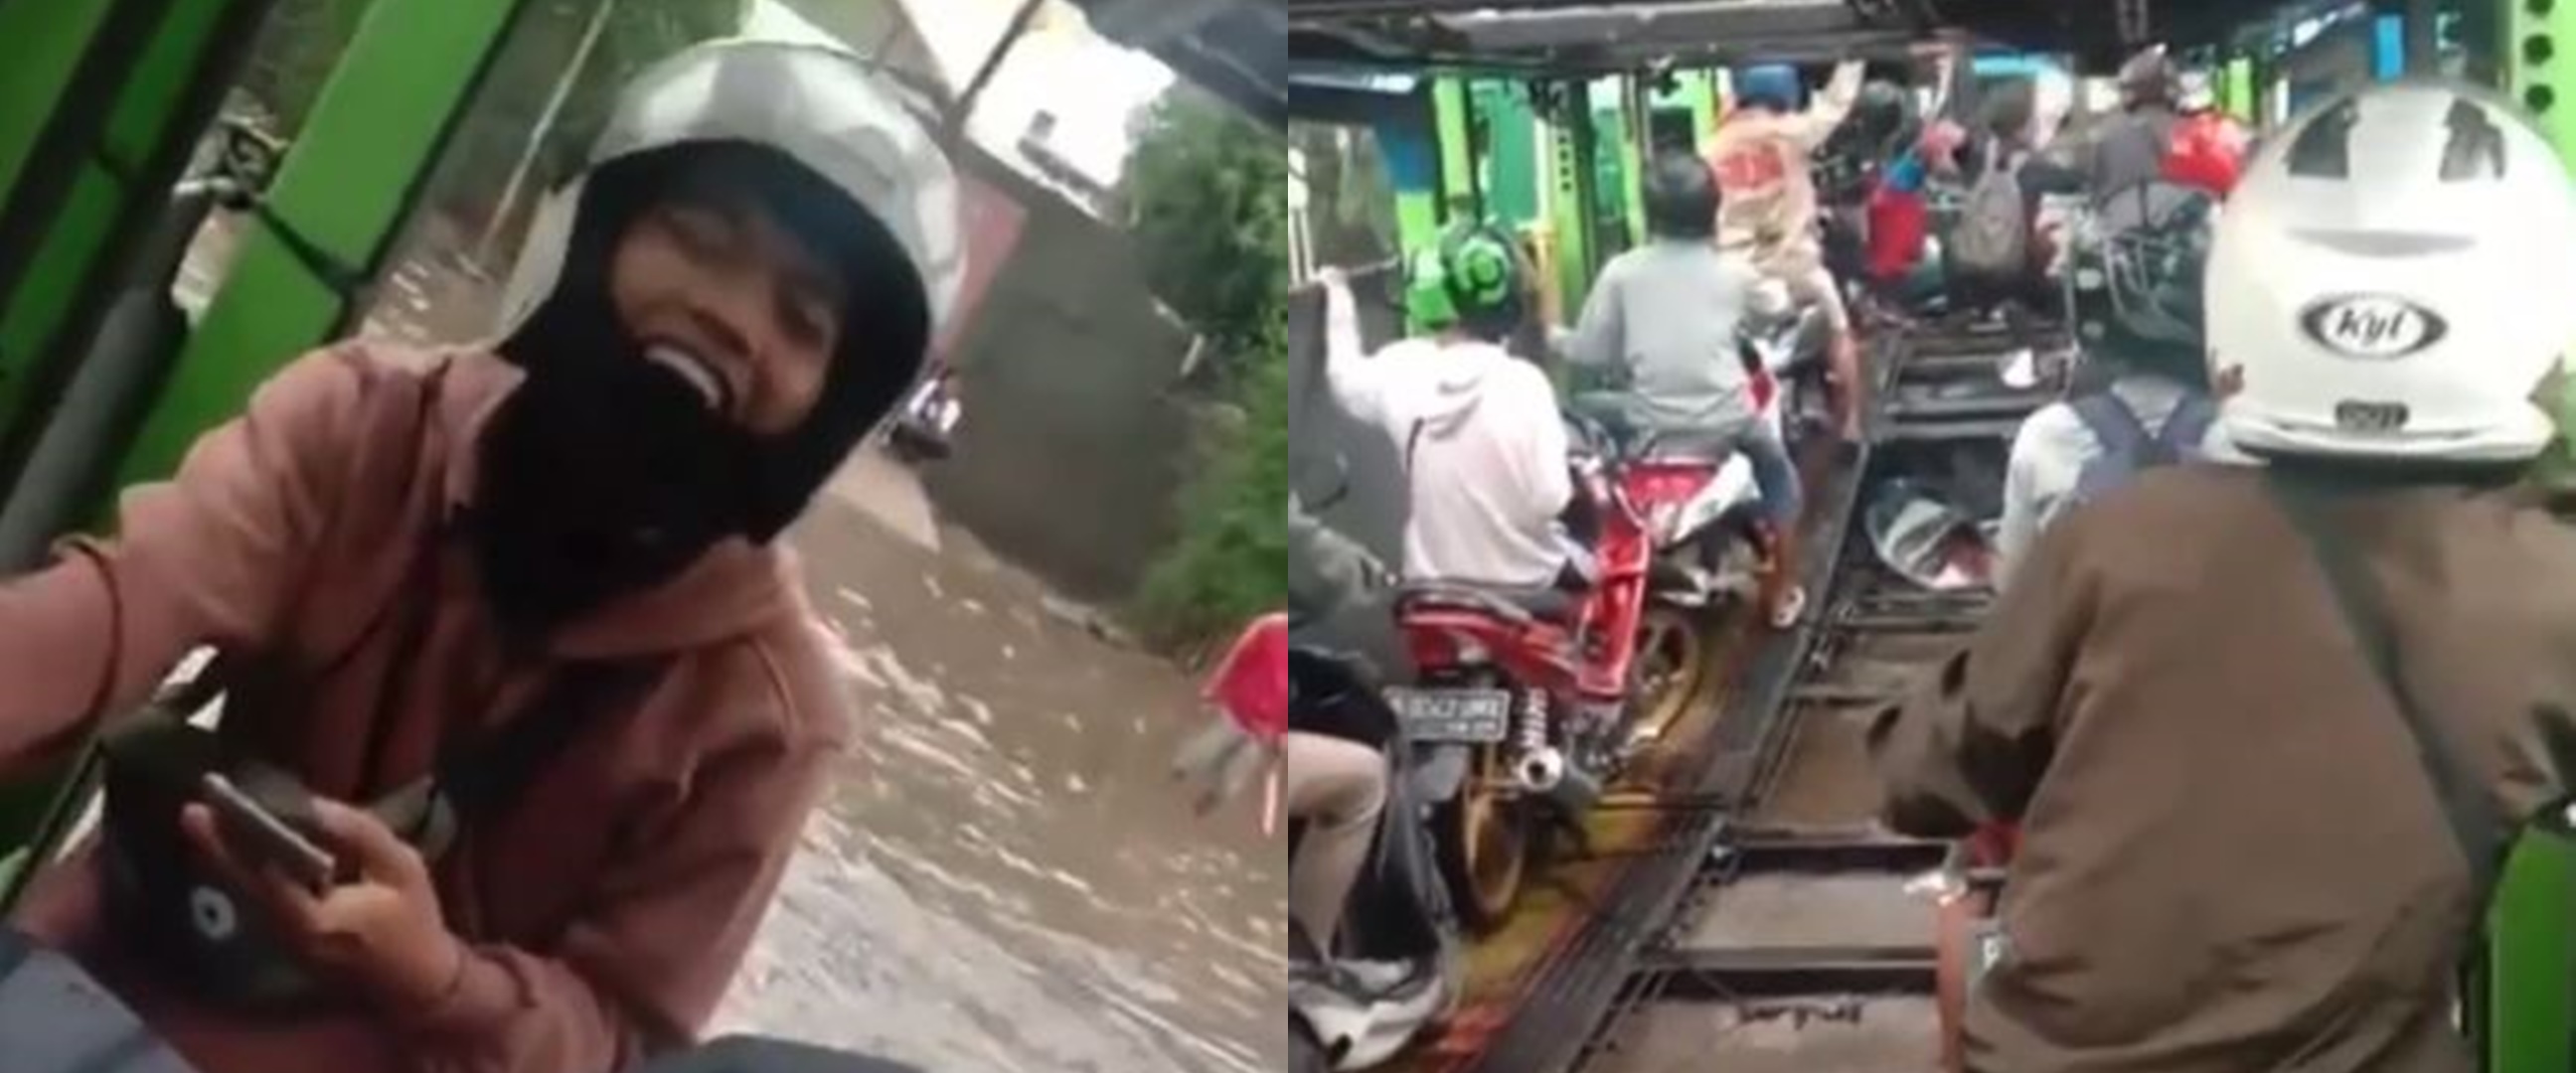 Cara pemotor lewati banjir Jakarta ini kreatif abis, bebas basah